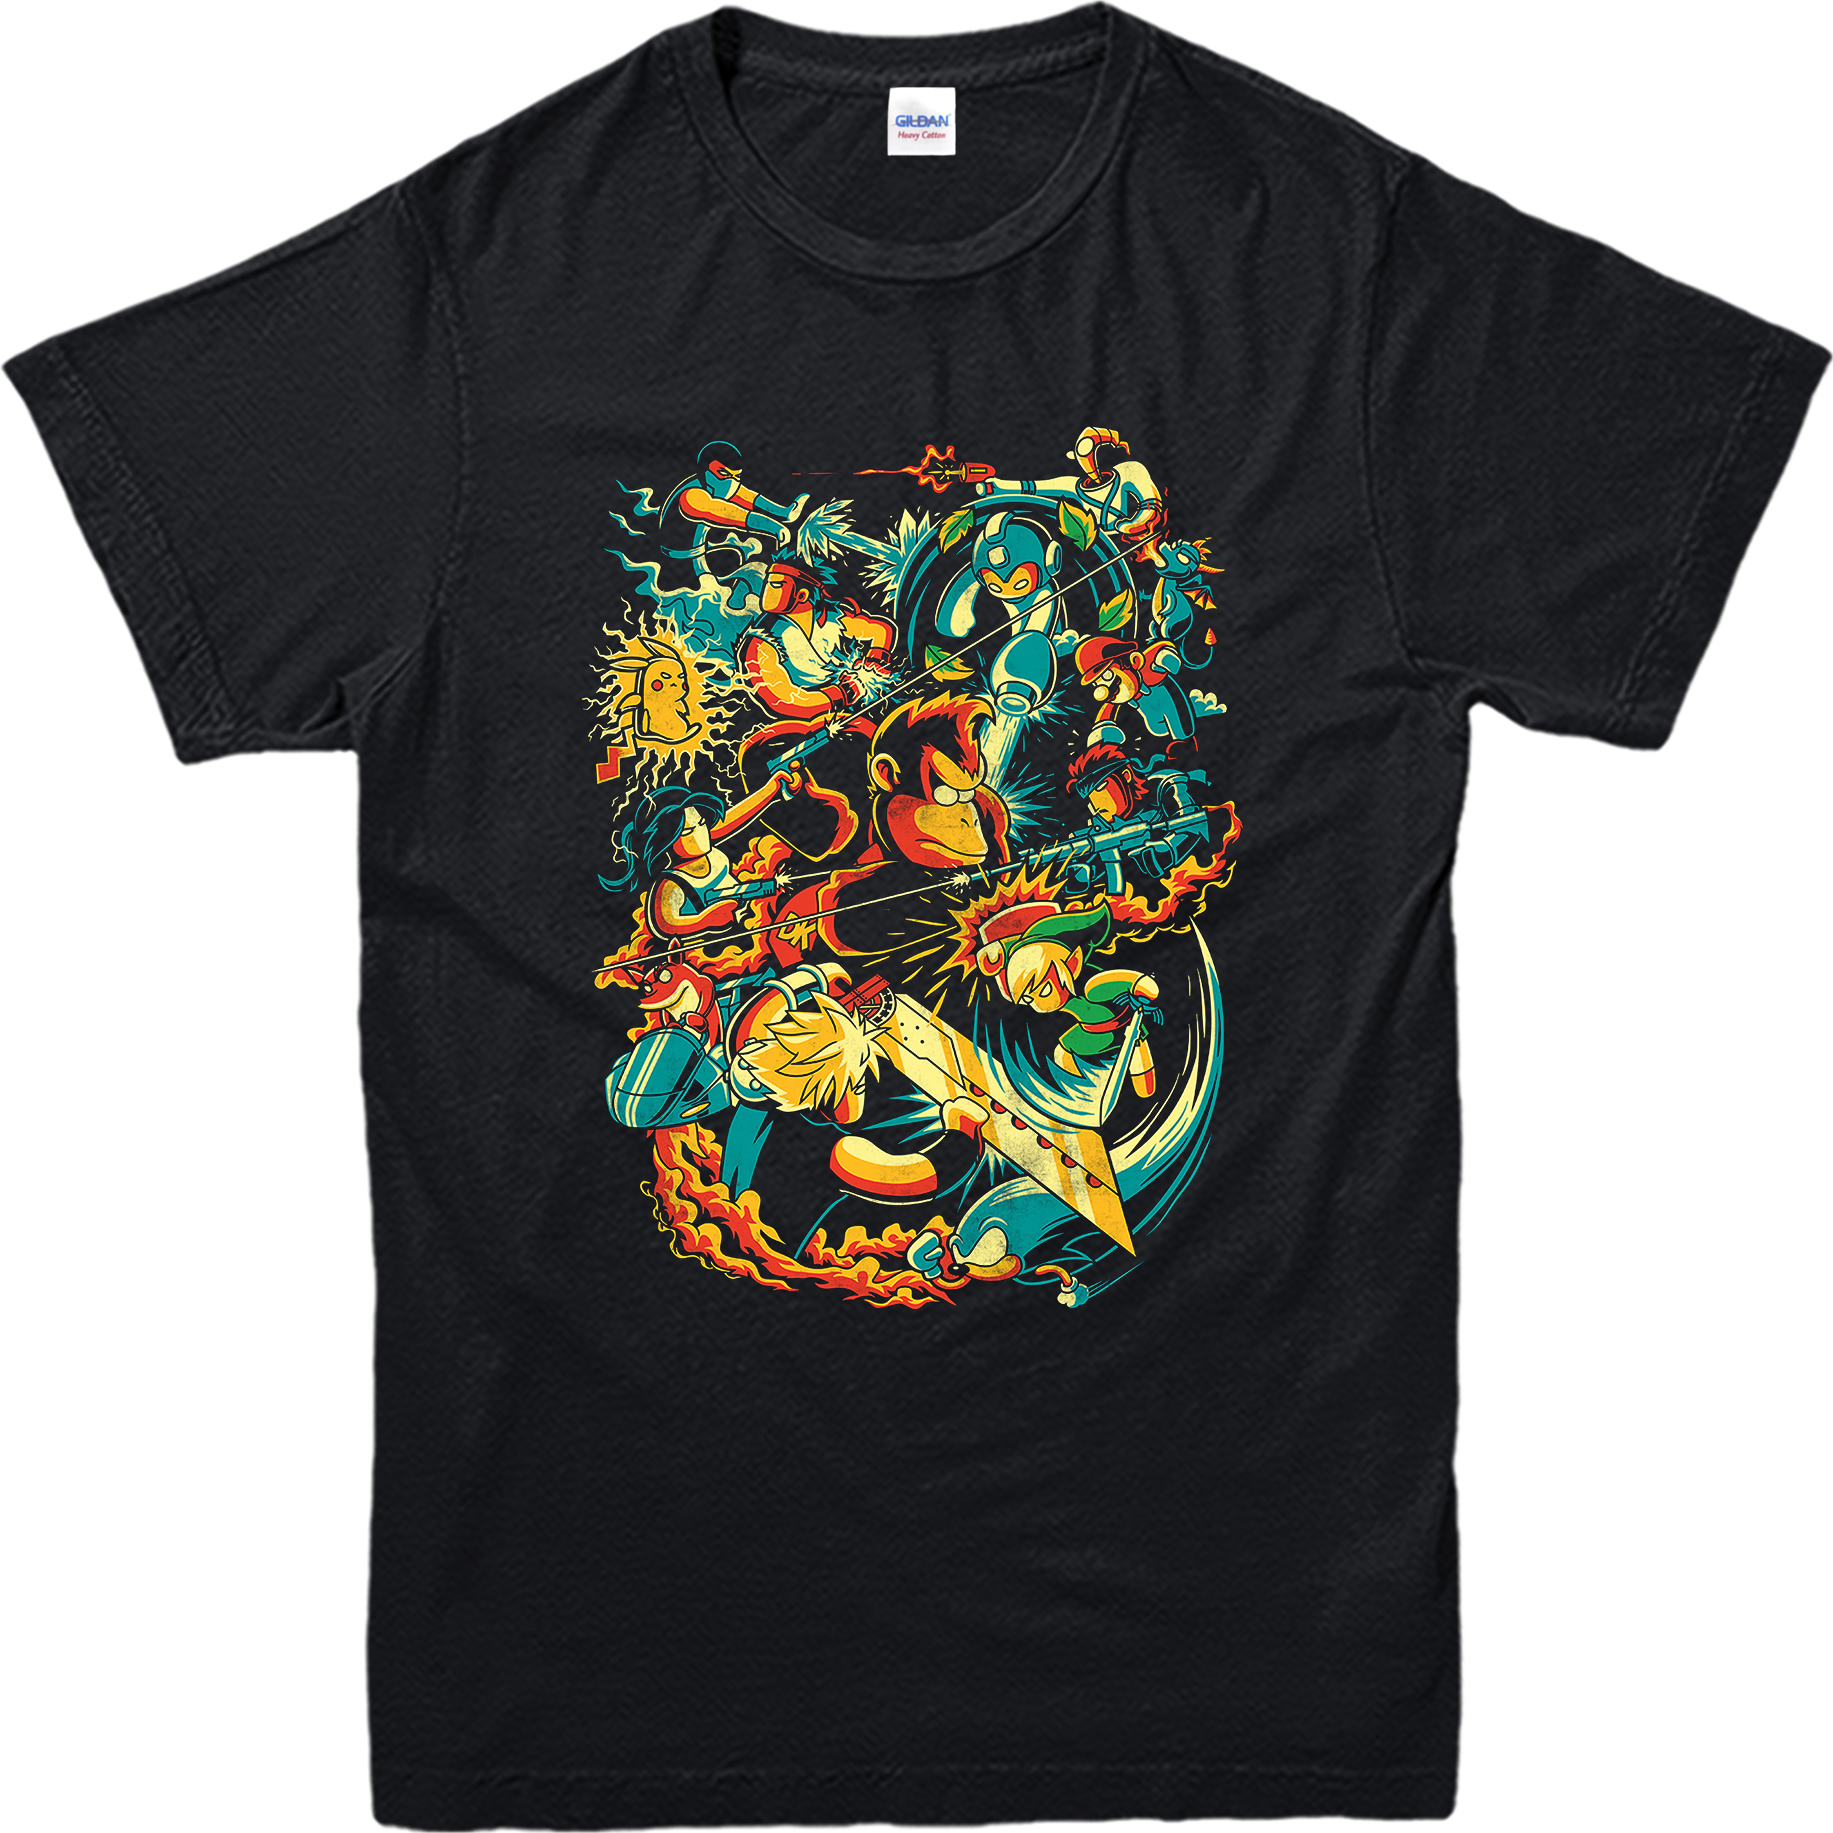 Gaming T-Shirt,Games of 90s era Spoof T-Shirt , Inspired Design Top | eBay